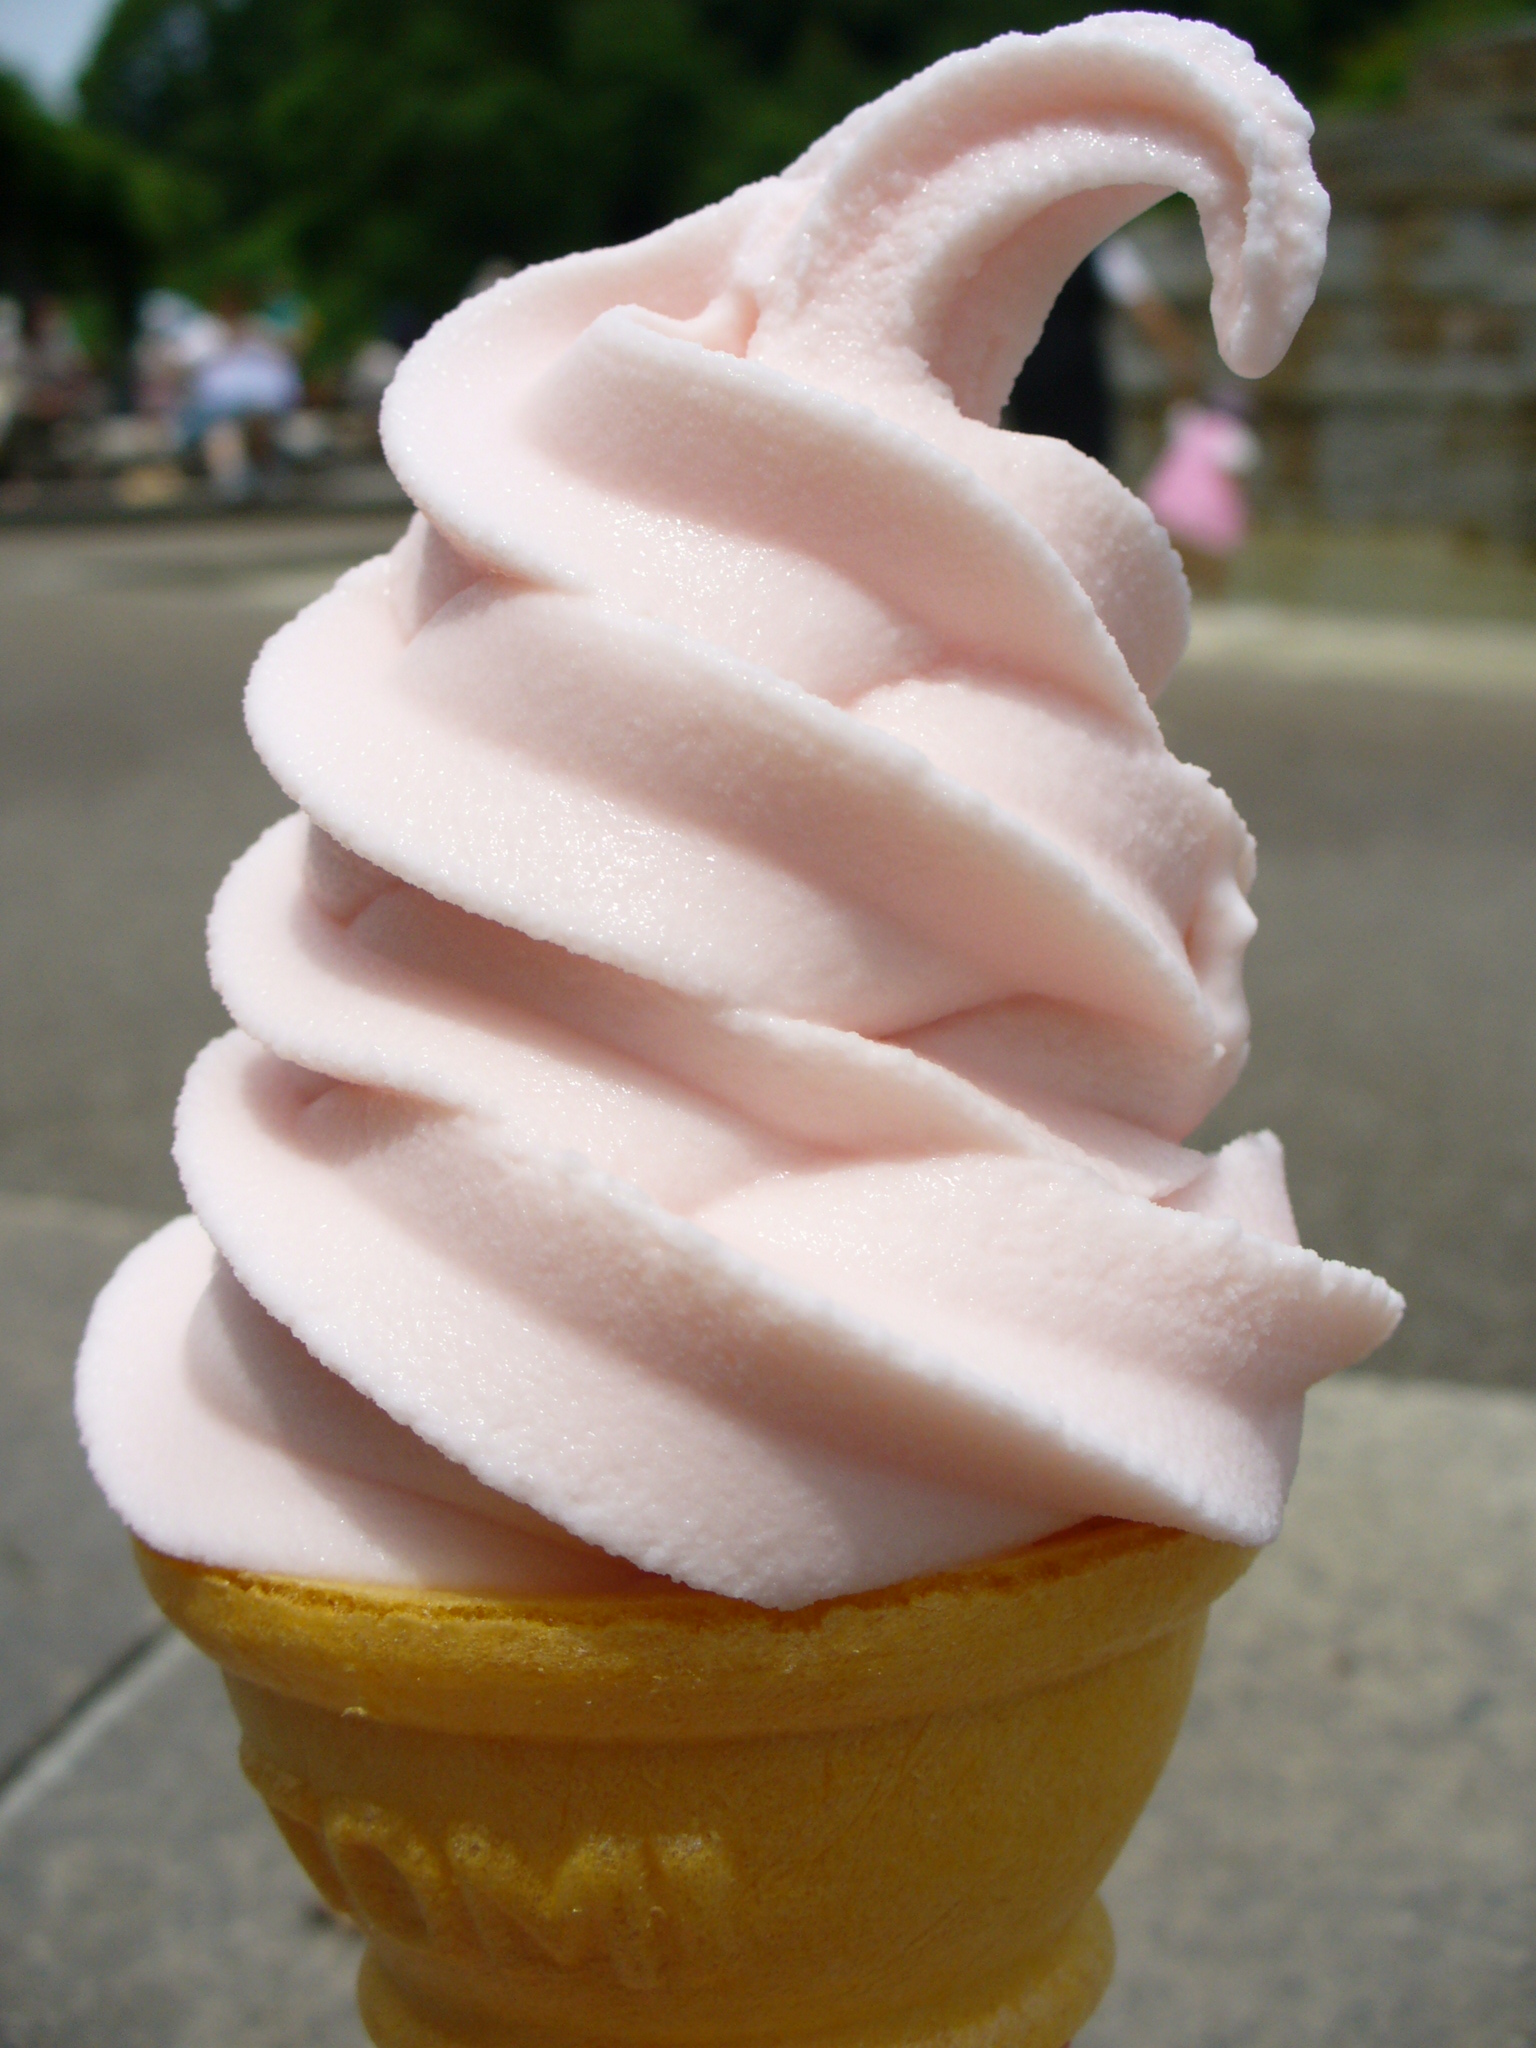 File:Soft Ice cream.jpg - Wikipedia